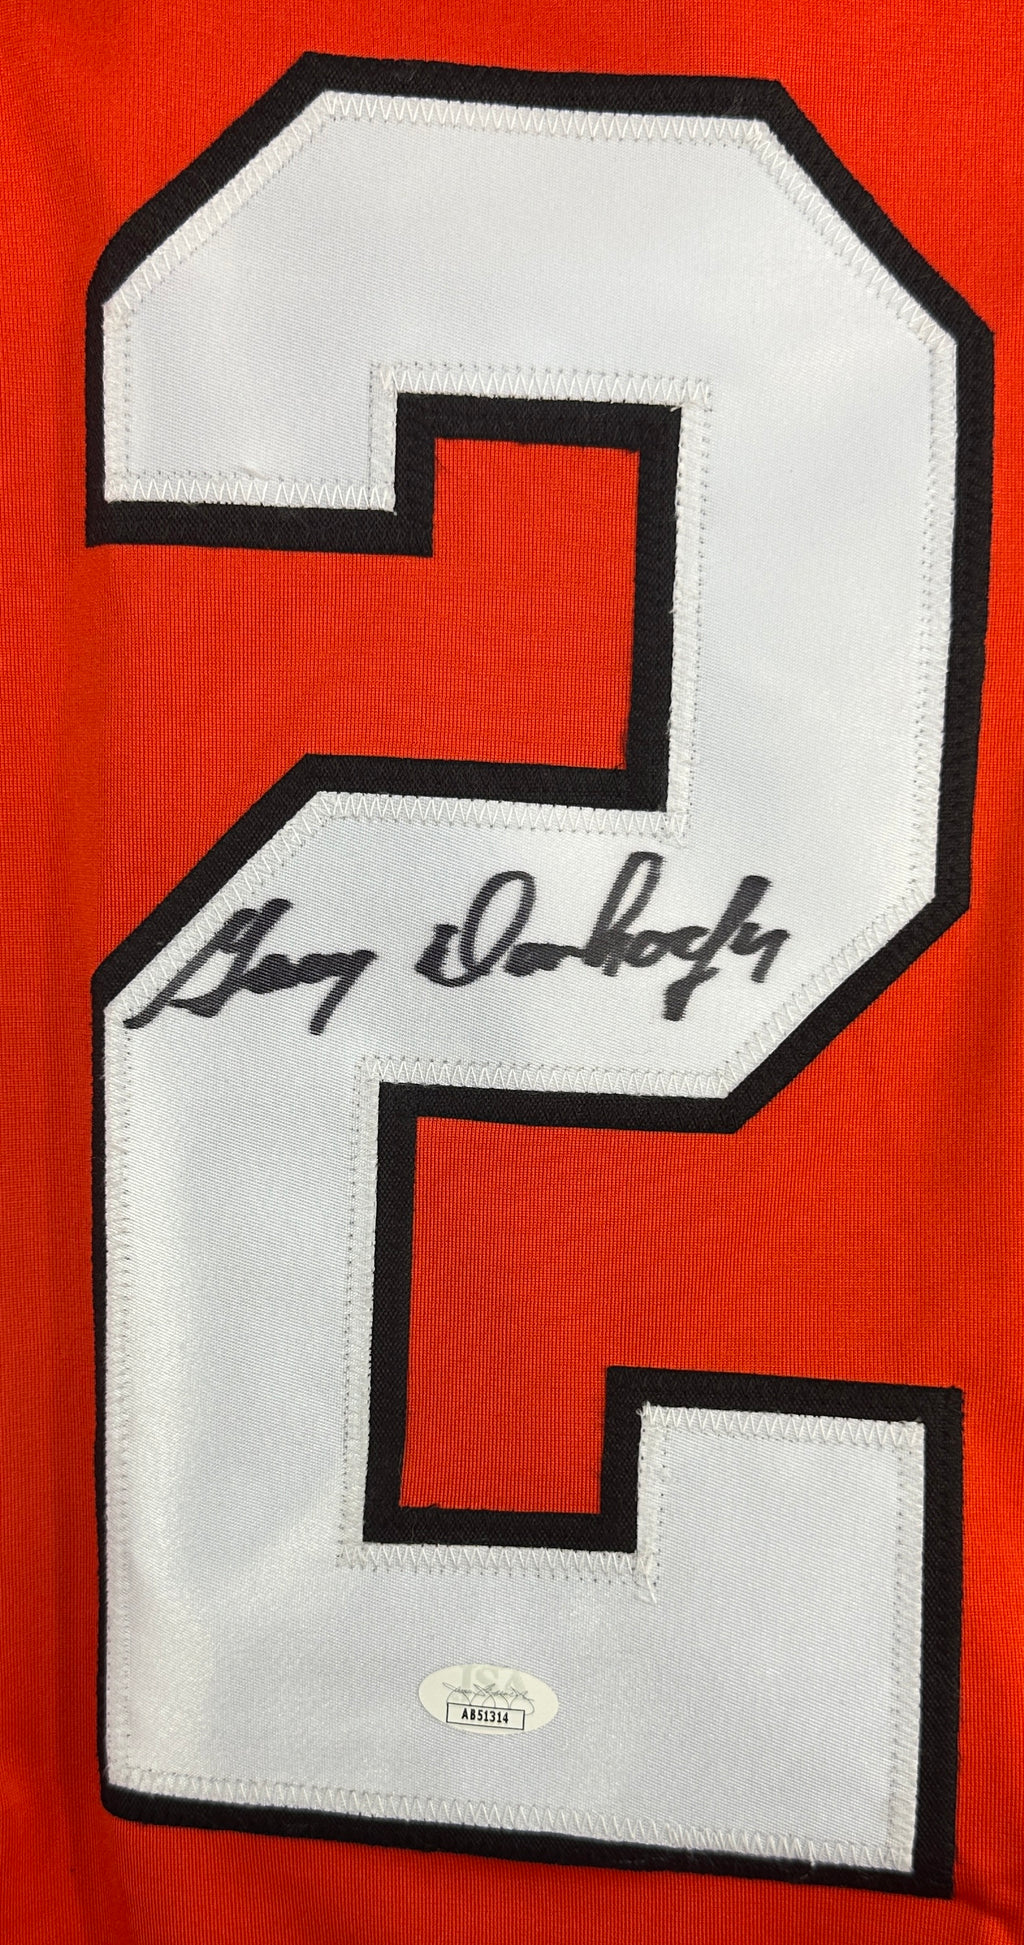 Gary Dornhoefer autographed signed jersey Philadelphia Flyers JSA COA